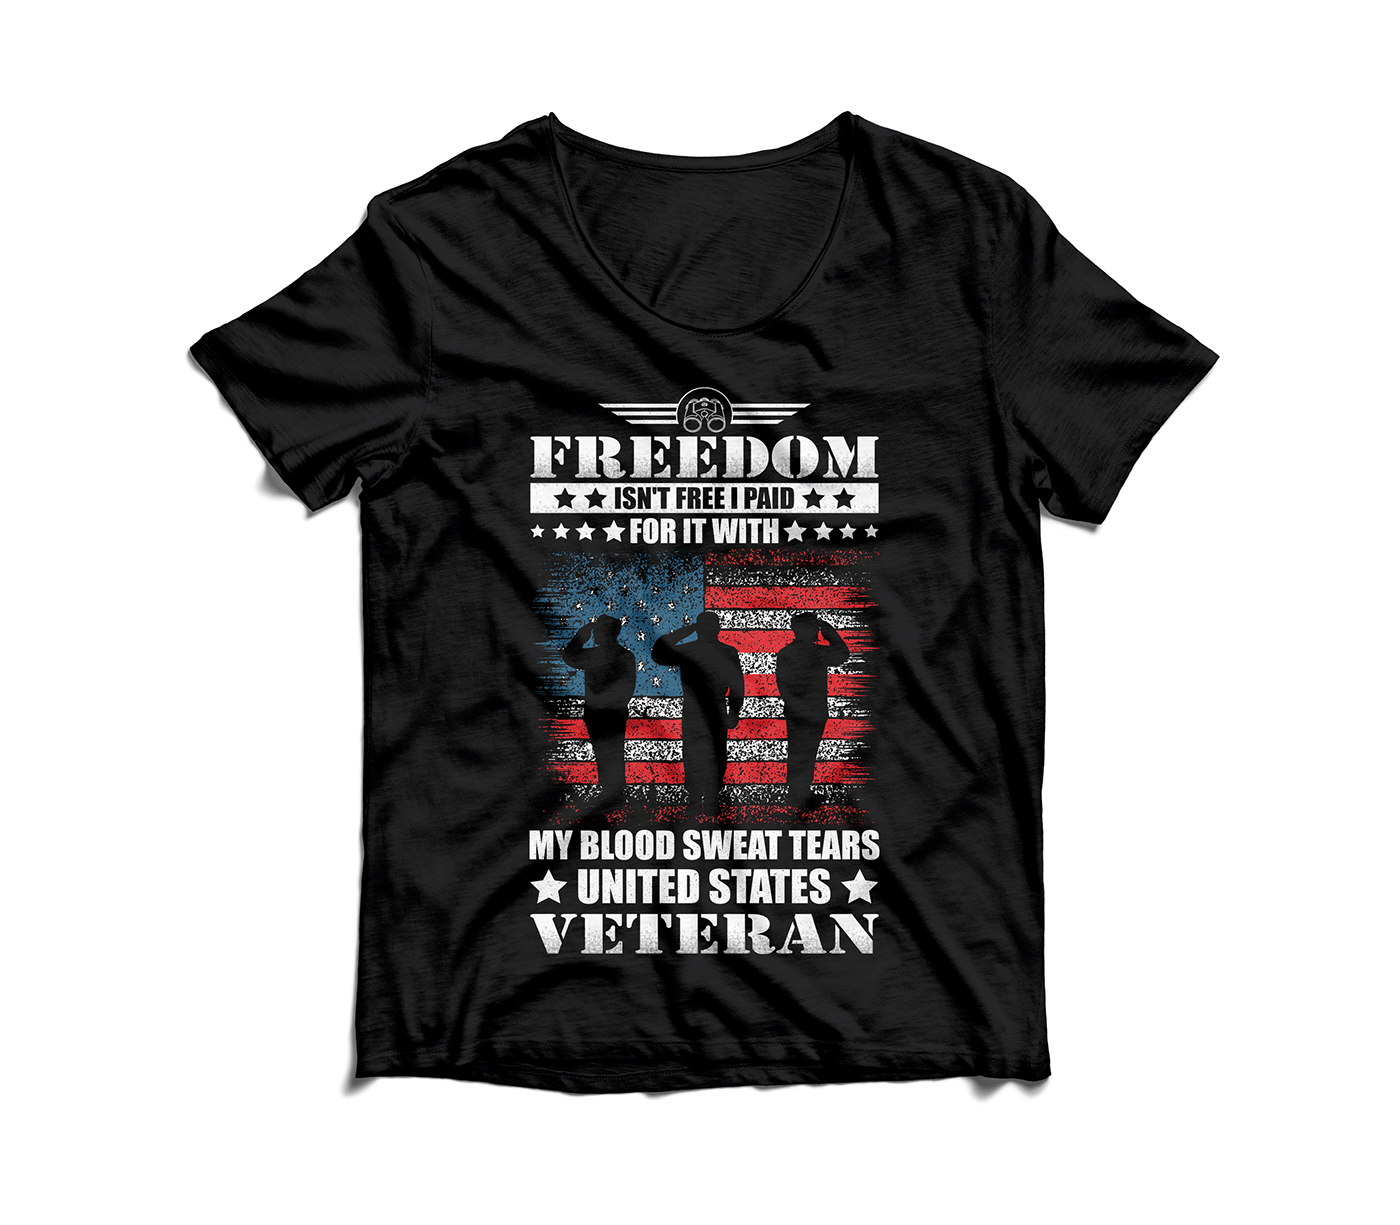 Army T-Shirt Design Military veterans t-shirt Tshirt Design Clothing apparel Fashion  USA T-Shirt Design